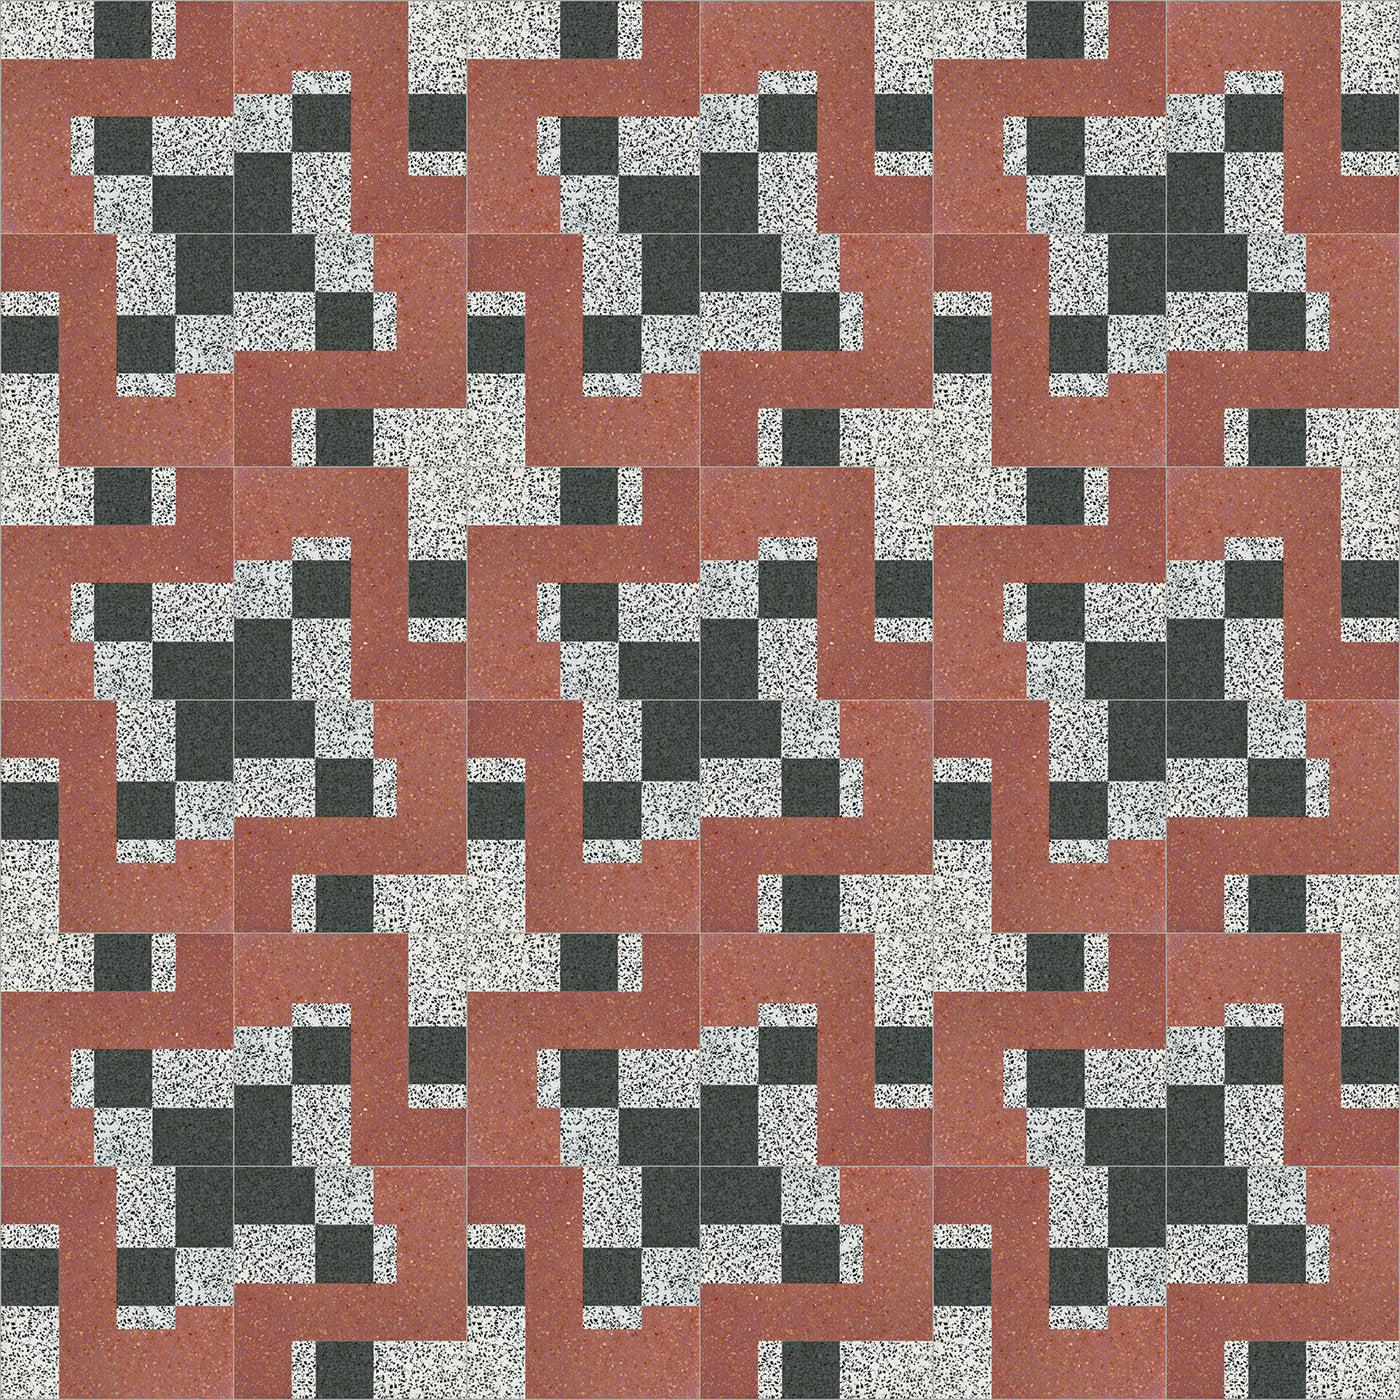 Eos Set of 25 Terrazzo Tiles - Alternative view 1